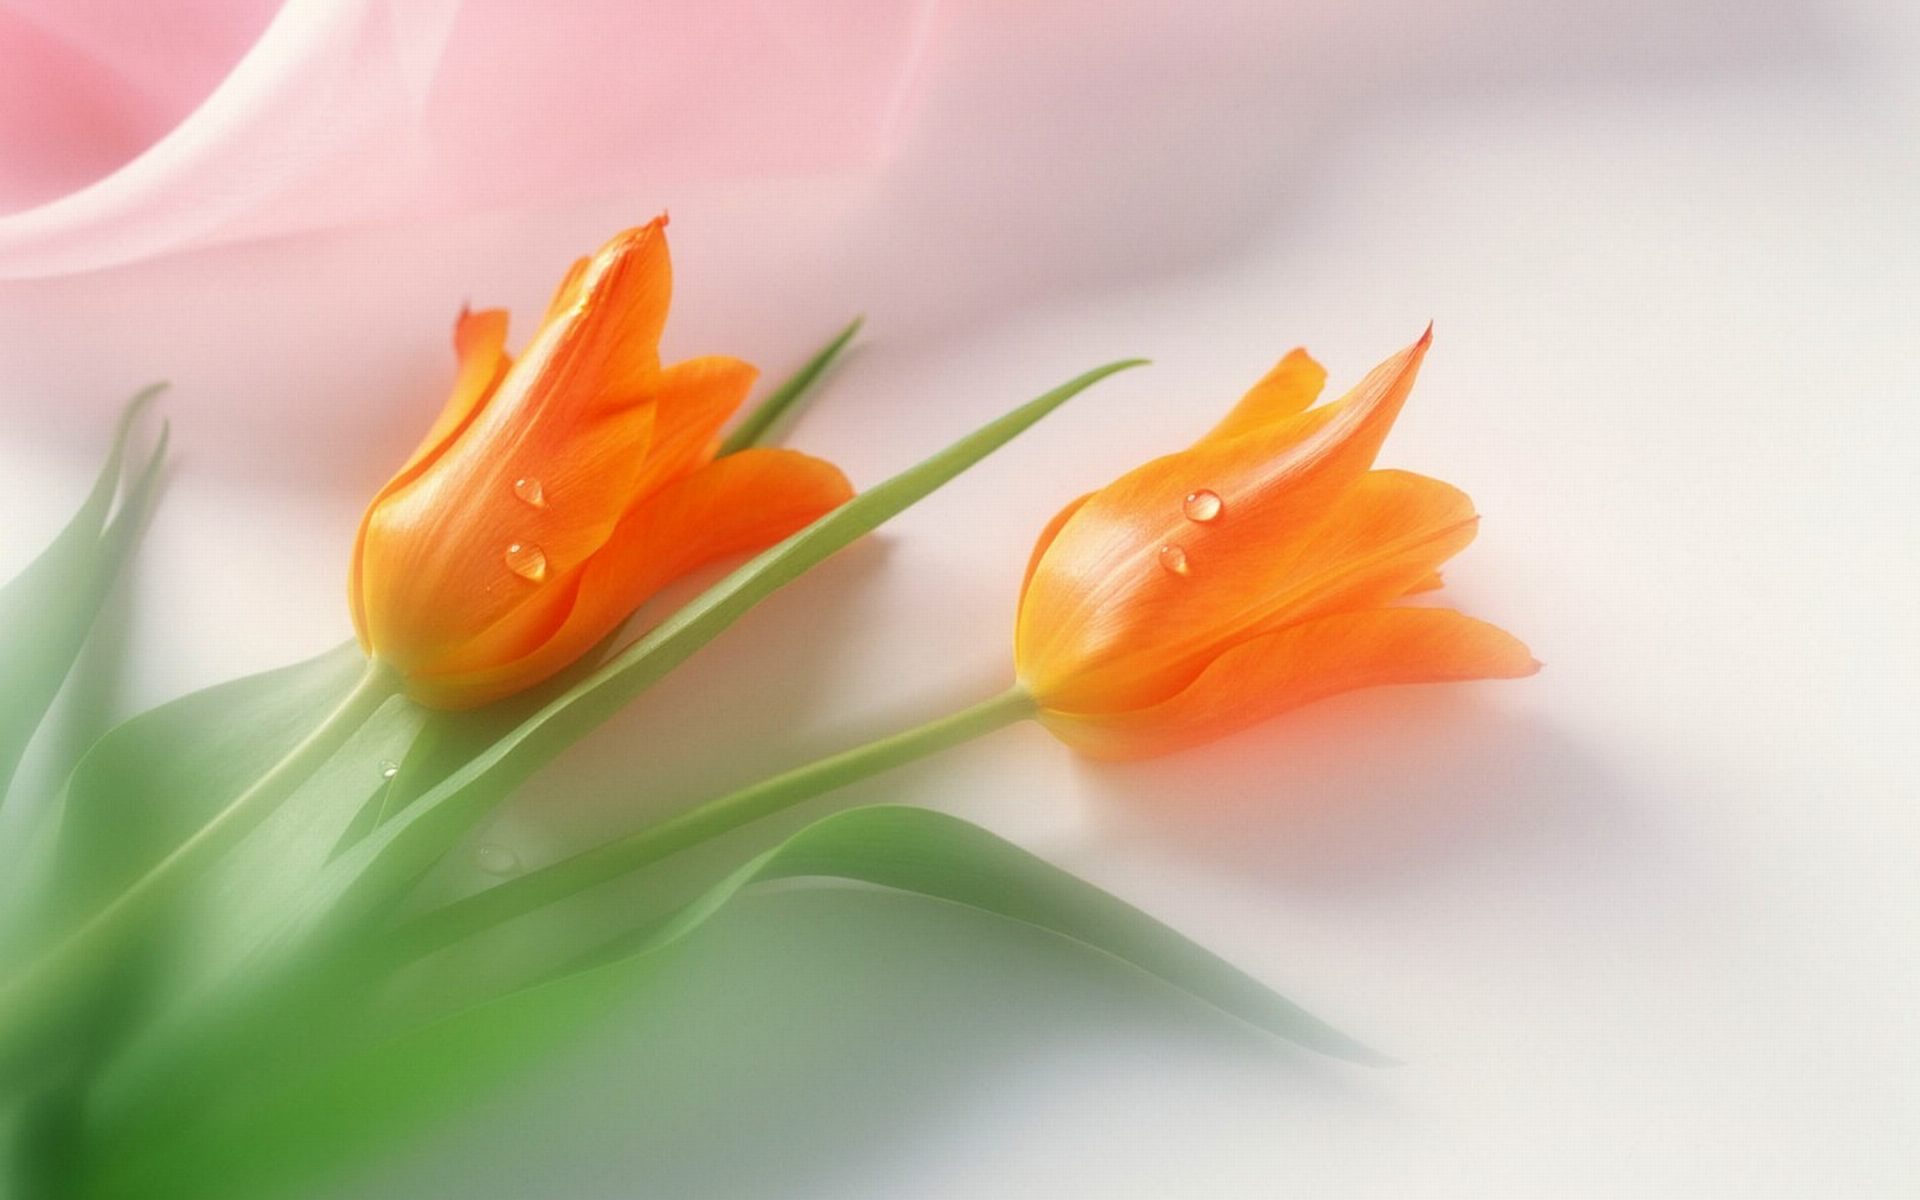 Tulips Flowers Wallpaper For Desktop, Laptop and Mobile